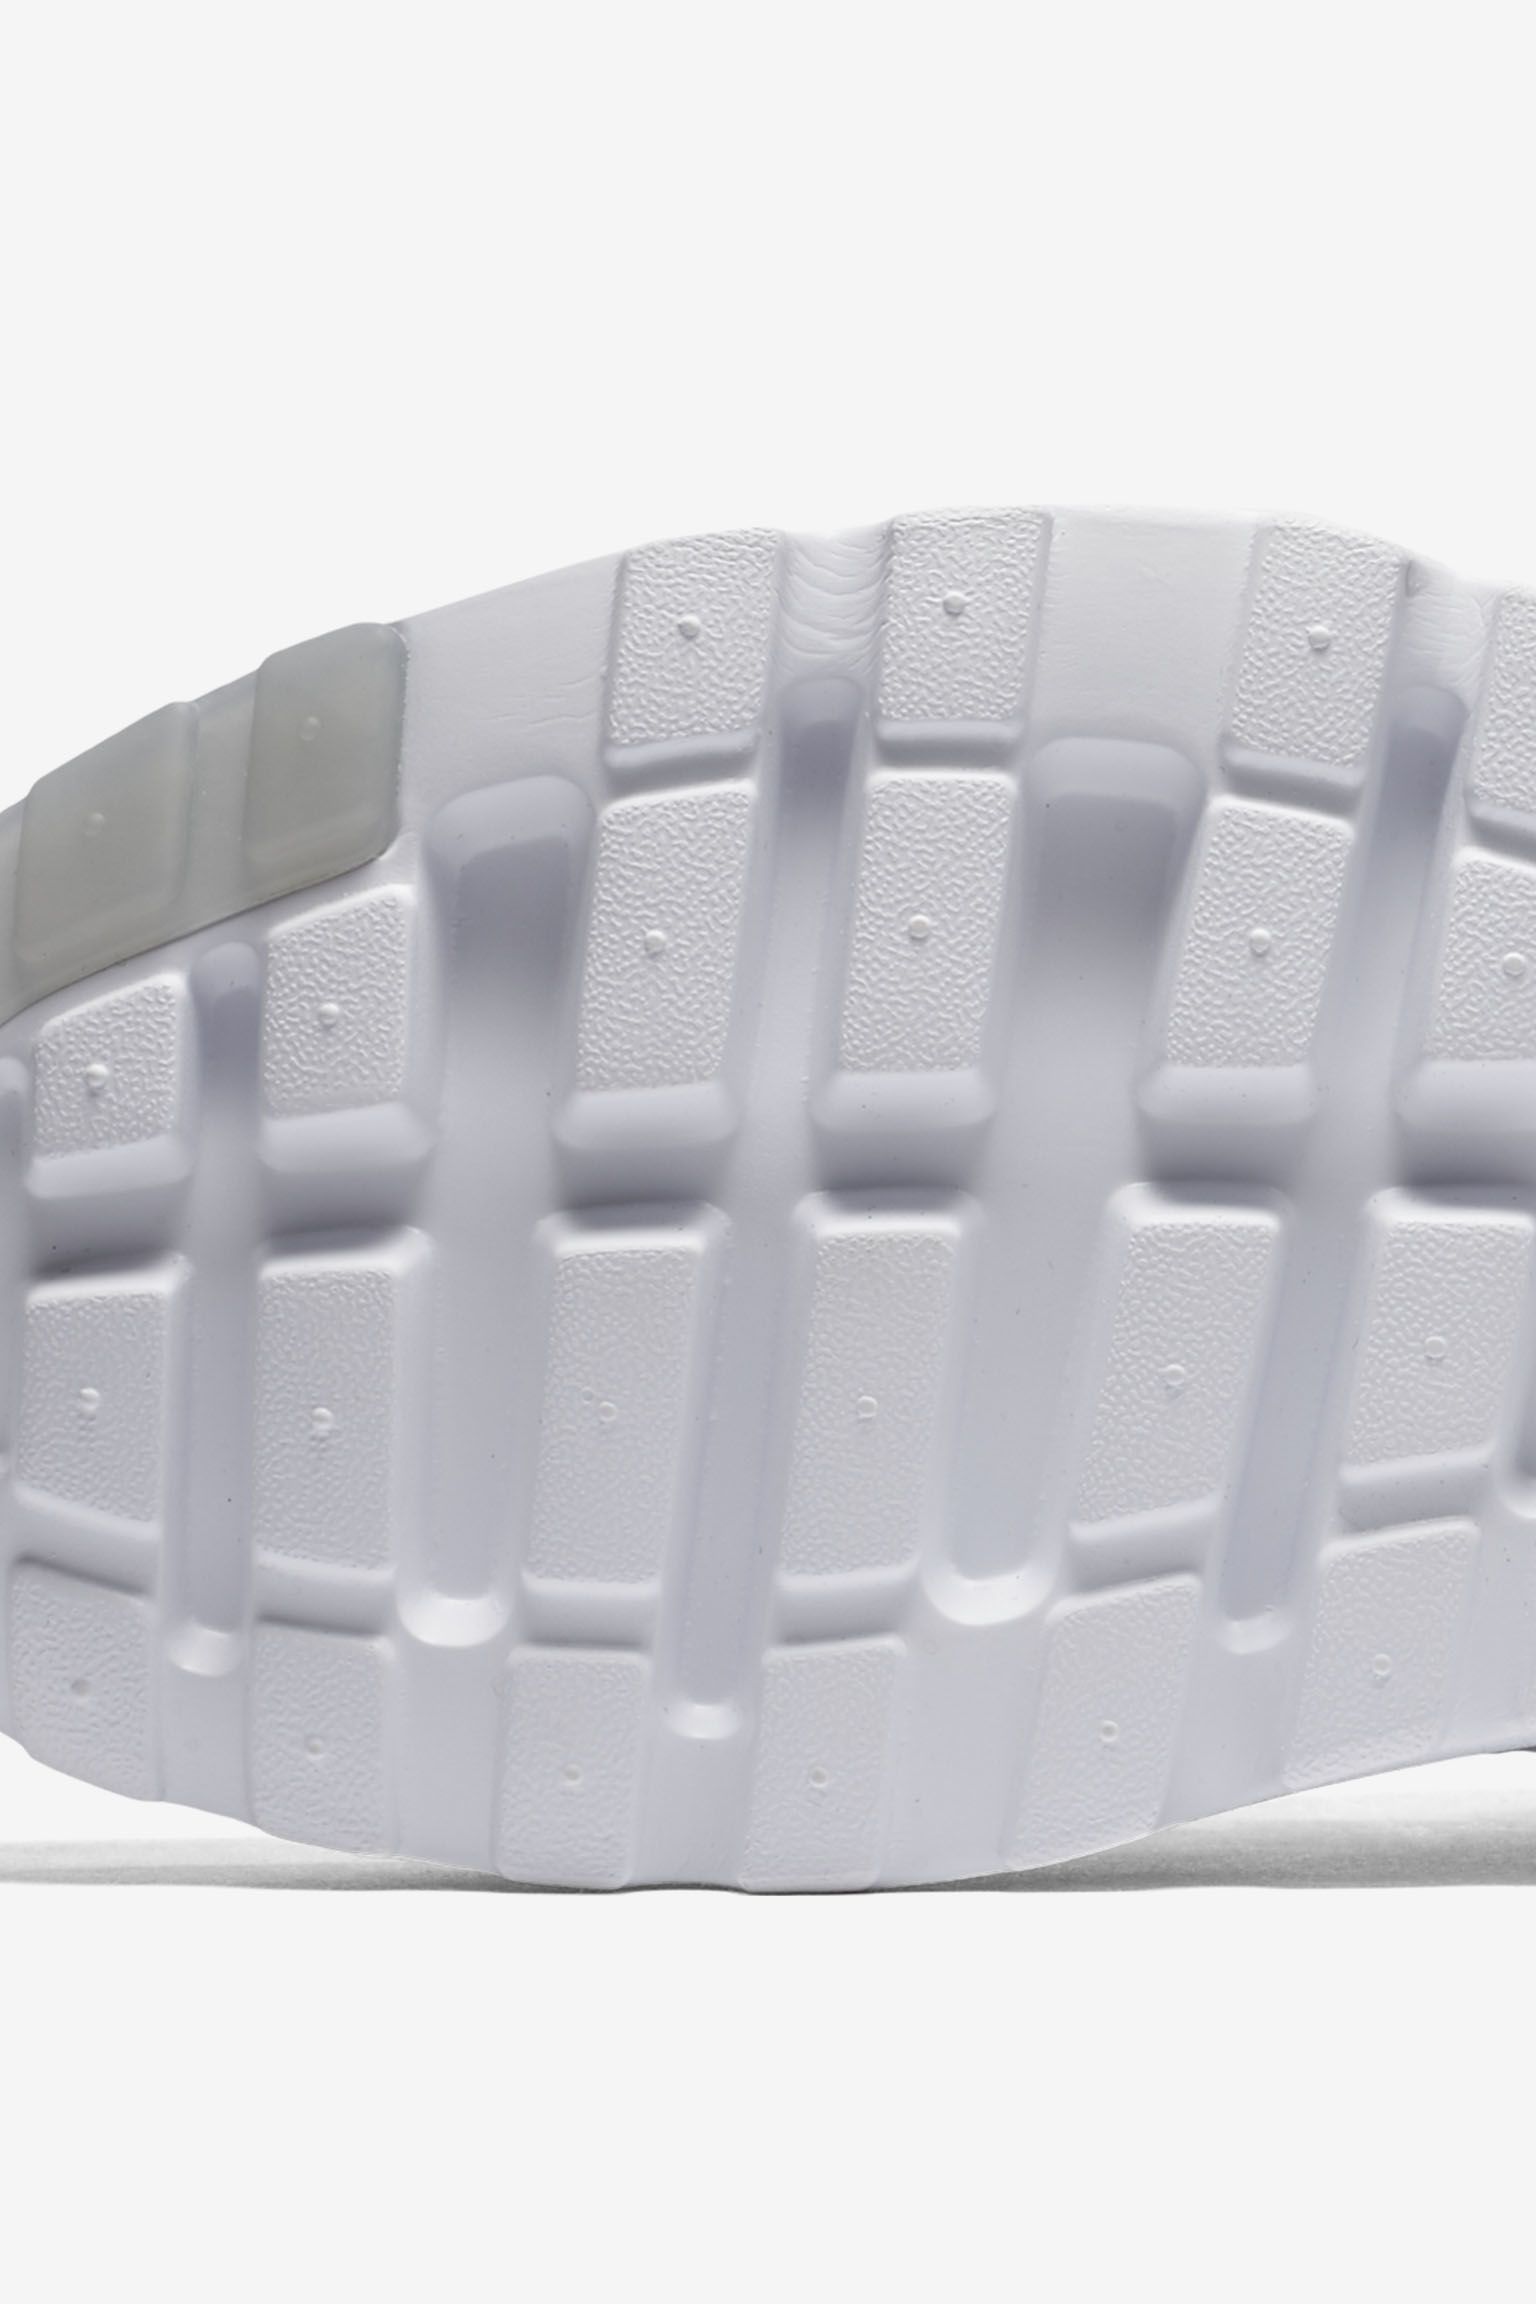 Nike Air Max Zero 'Triple White' Release Date. Nike SNKRS